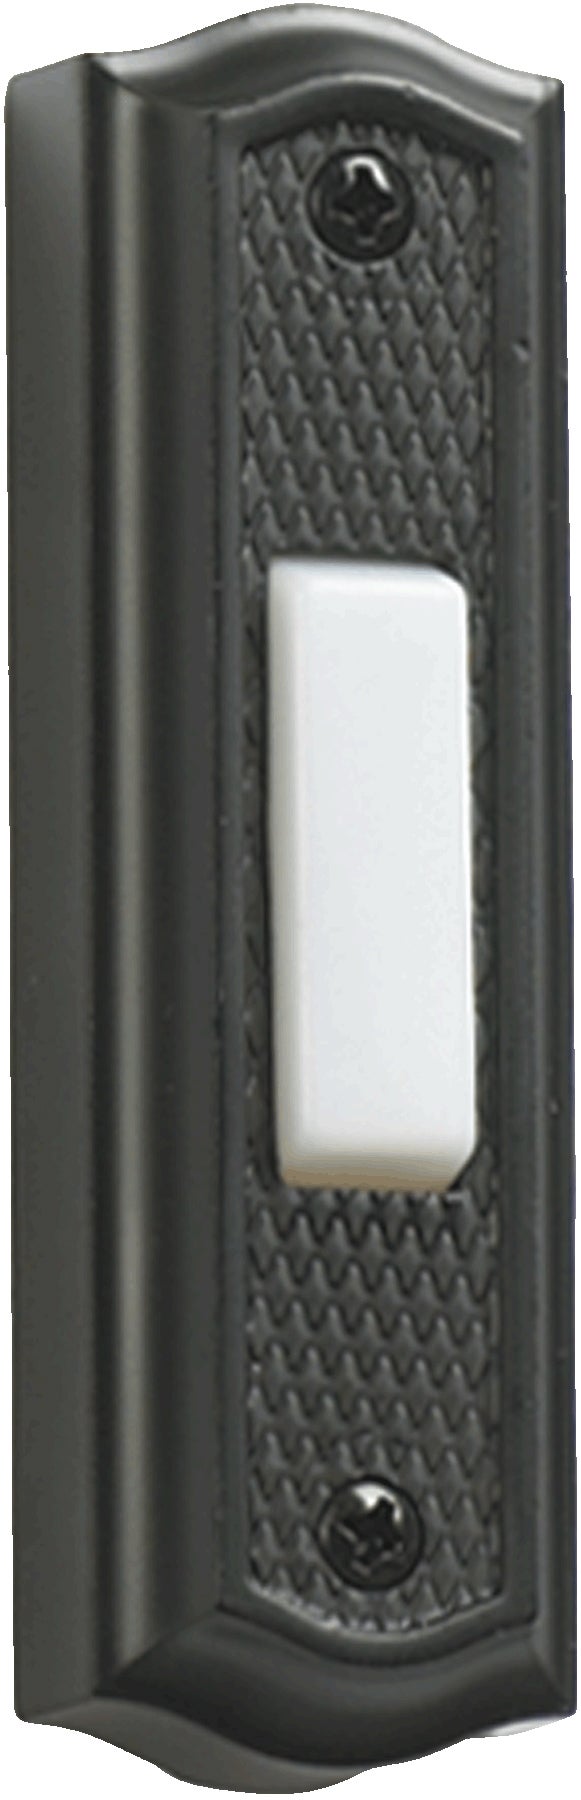 Antique Silver Doorbell Button by Quorum Lighting at Destination Lighting